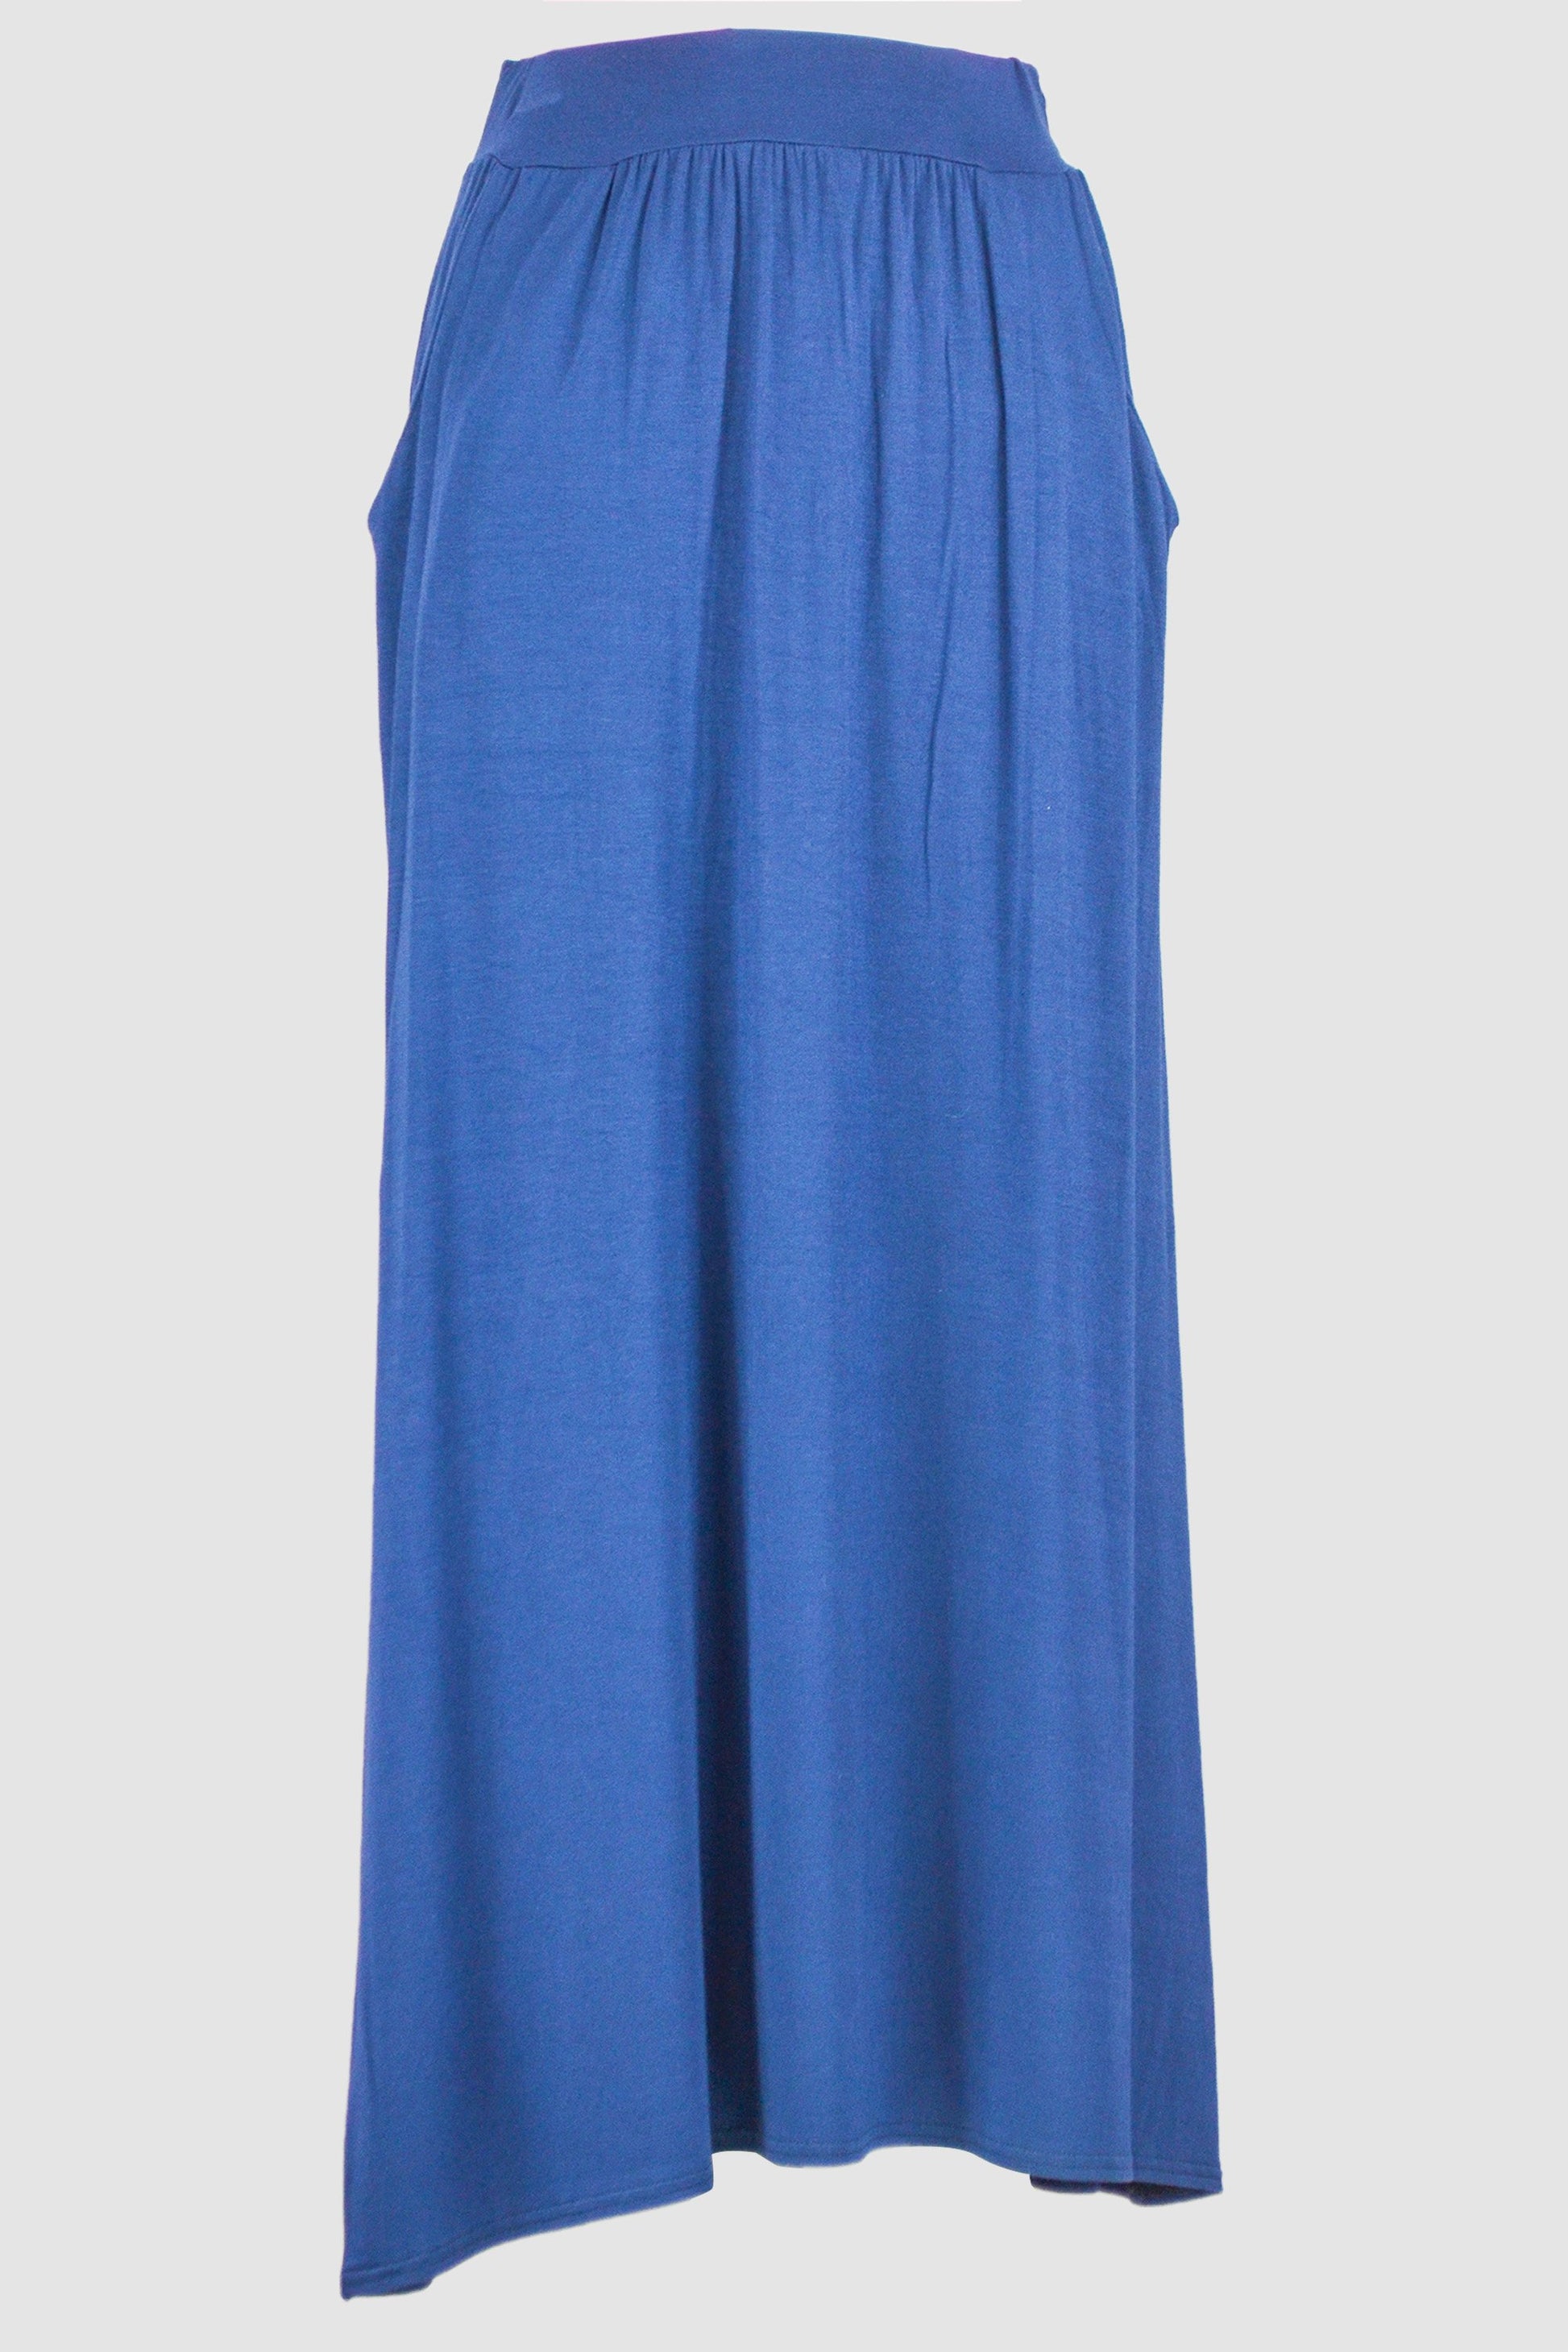 Blue Jersey Skirt With Pockets-almanaar Islamic Store